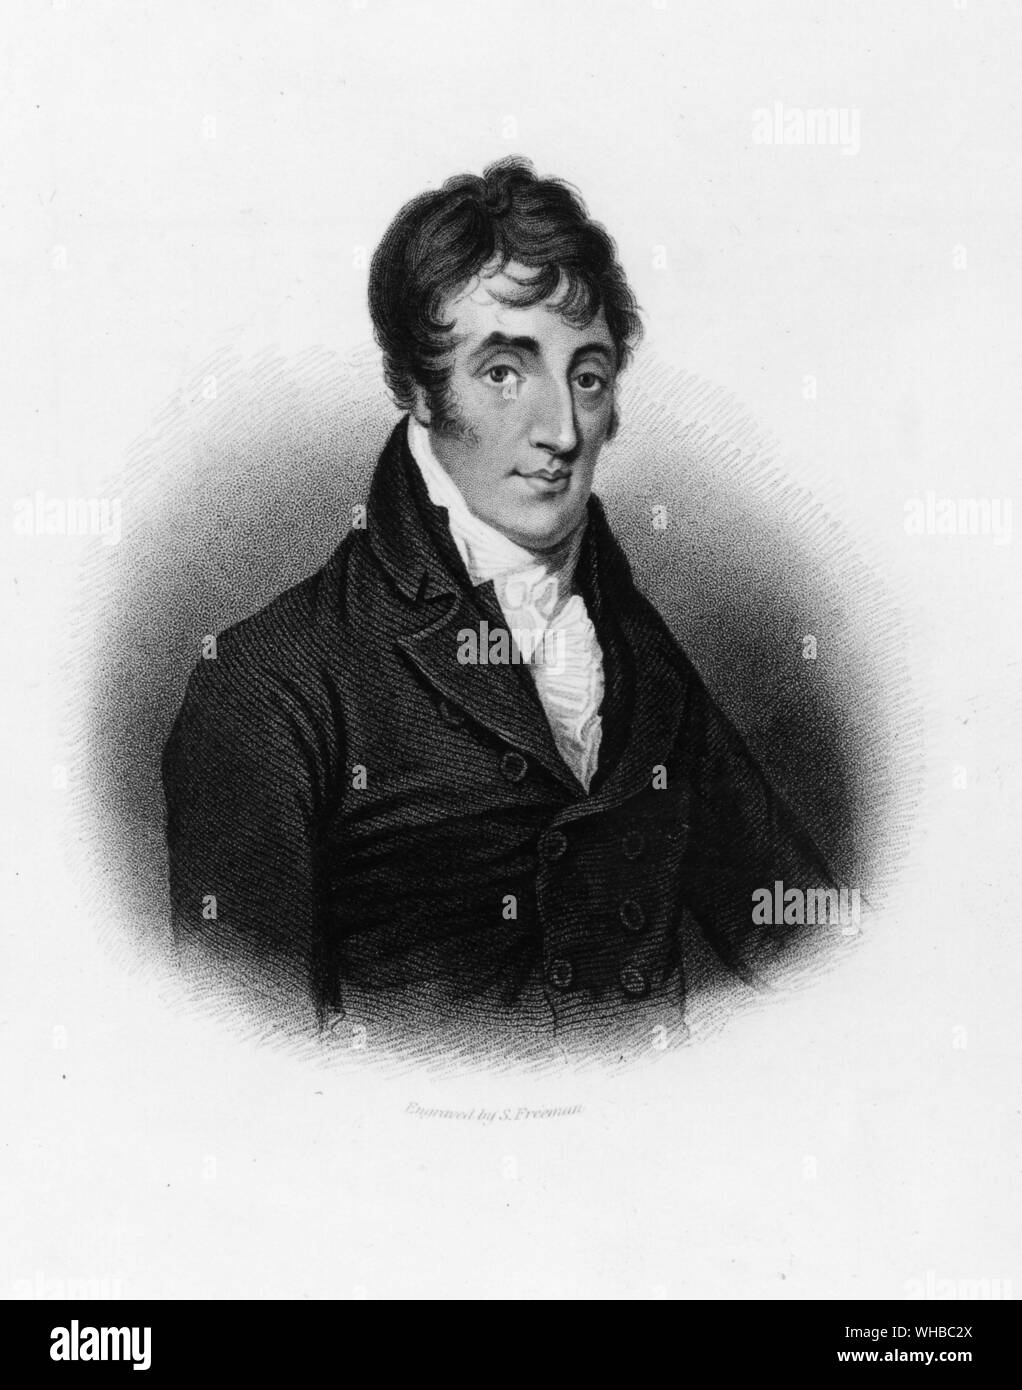 James Grahame (22 de abril de 1765 - 14 de septiembre de 1811) fue un poeta escocés. Foto de stock